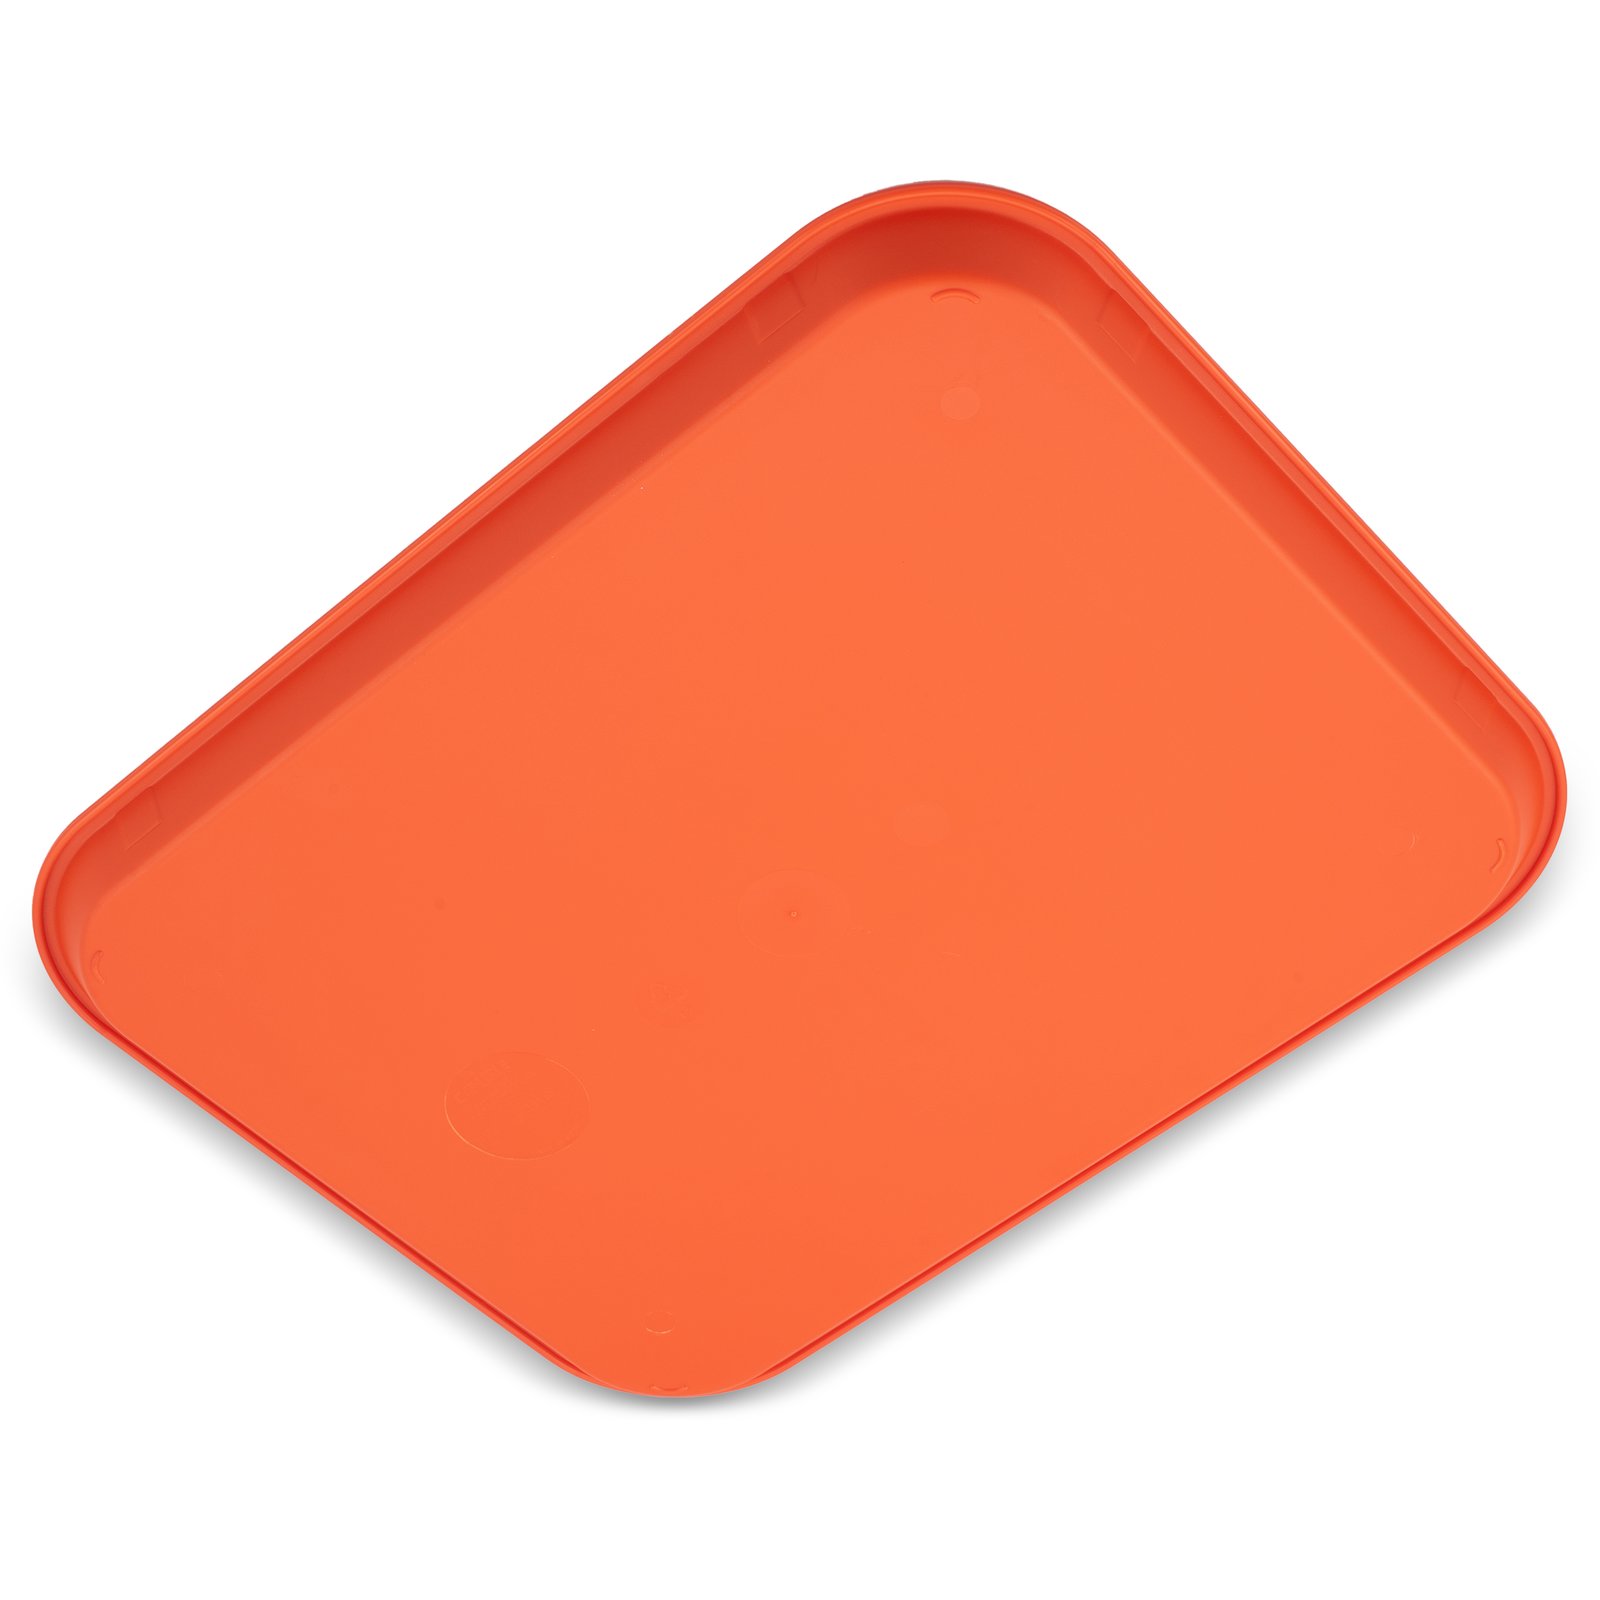 Fast Food Tray, PP Plastic Tray - Orange